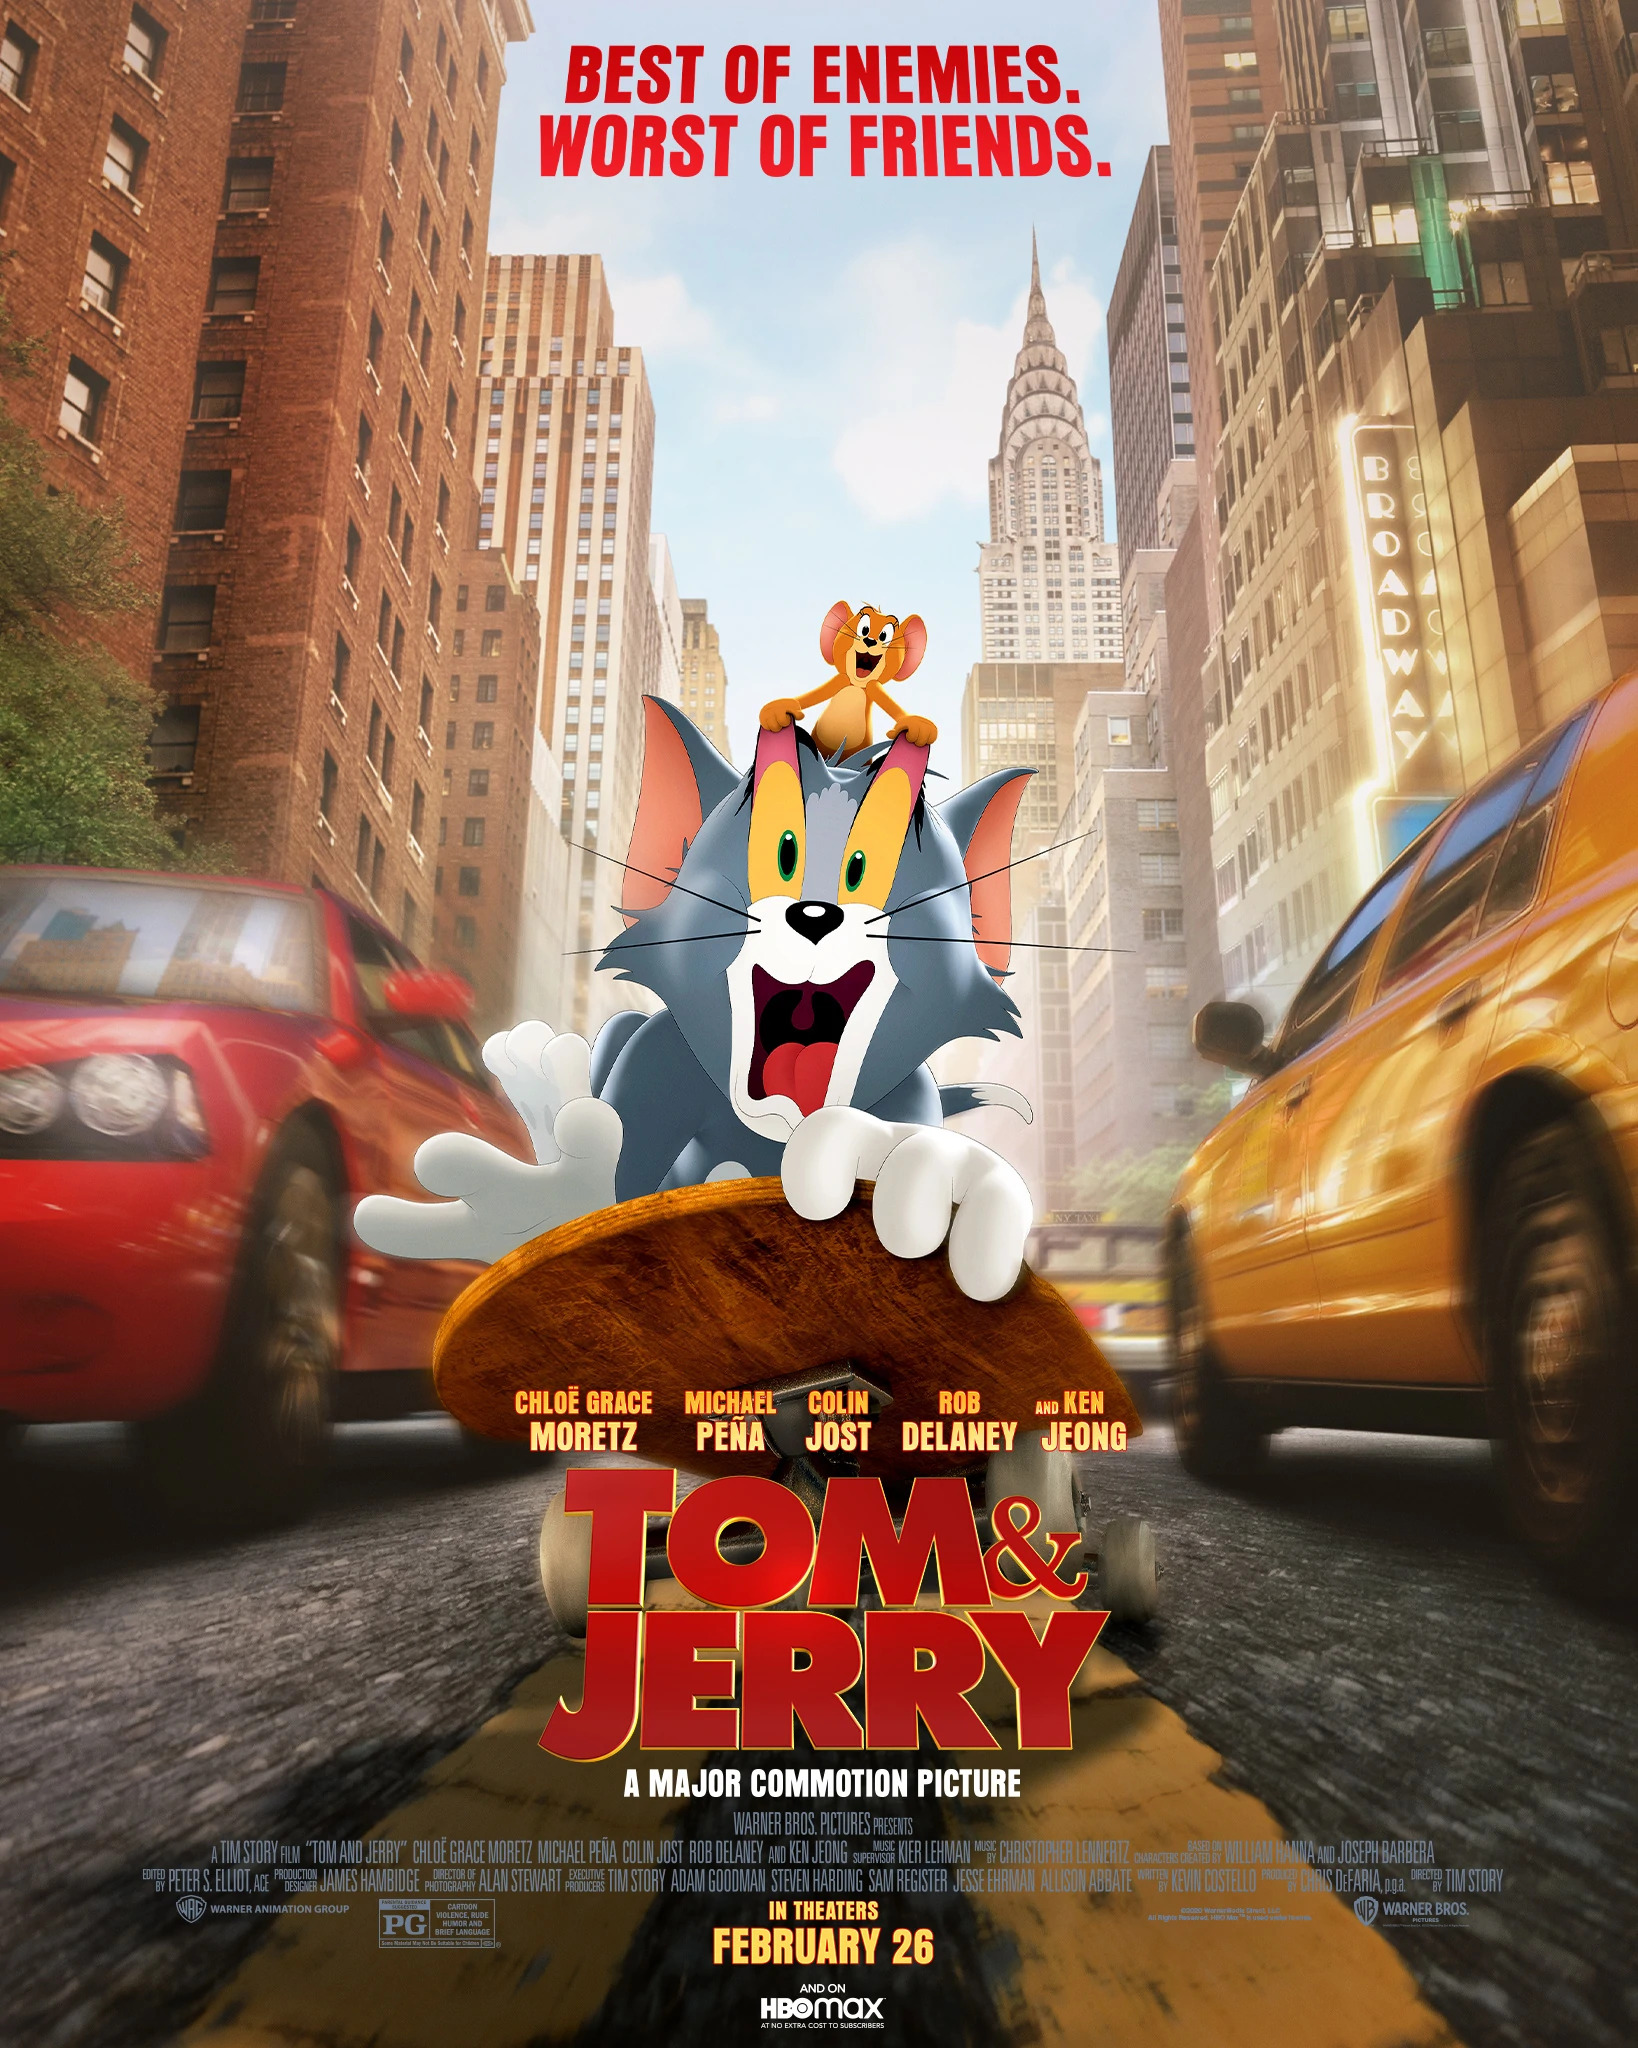 Tom and Jerry (2021 film) Warner Bros